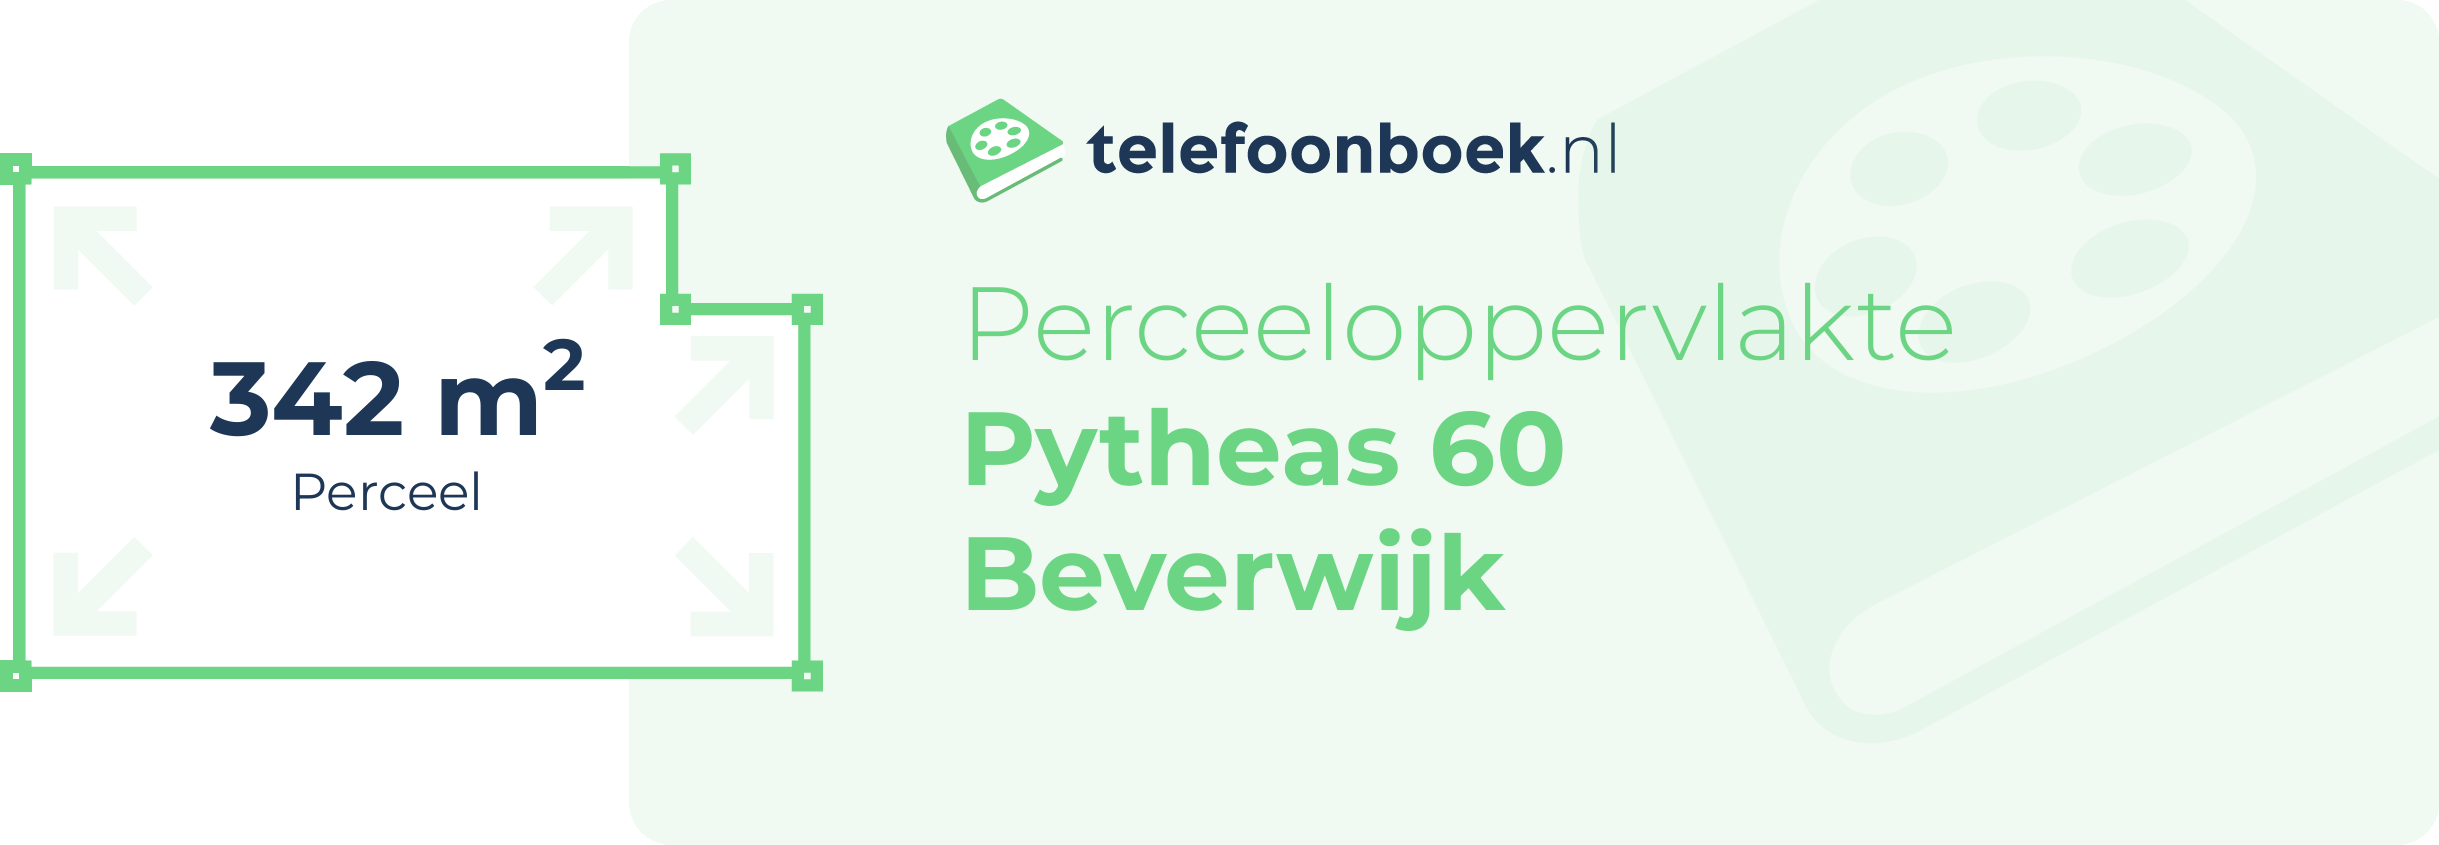 Perceeloppervlakte Pytheas 60 Beverwijk